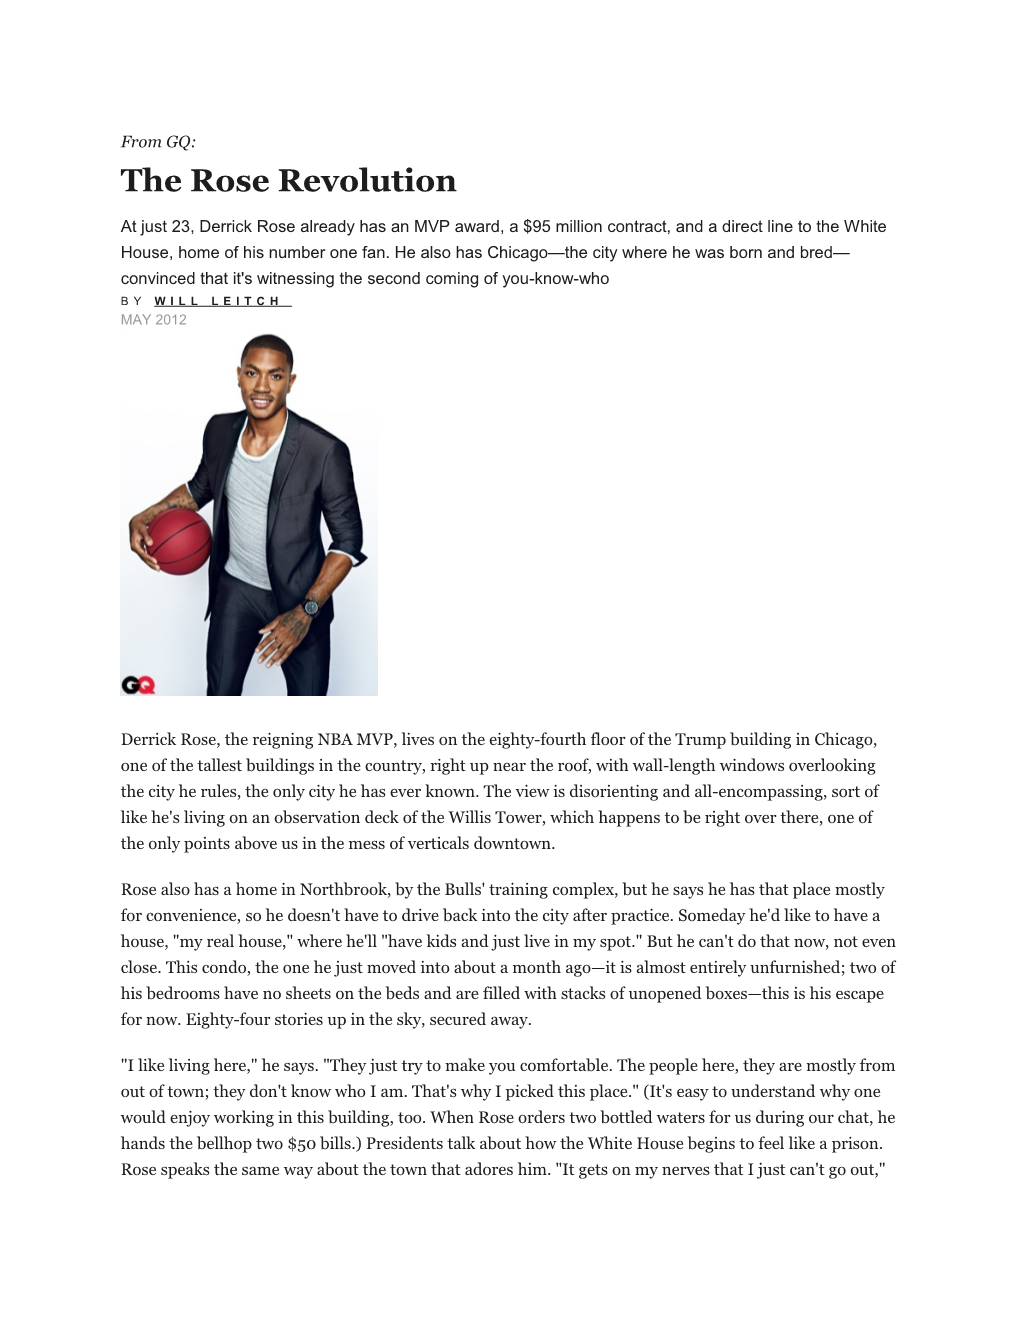 The Rose Revolution